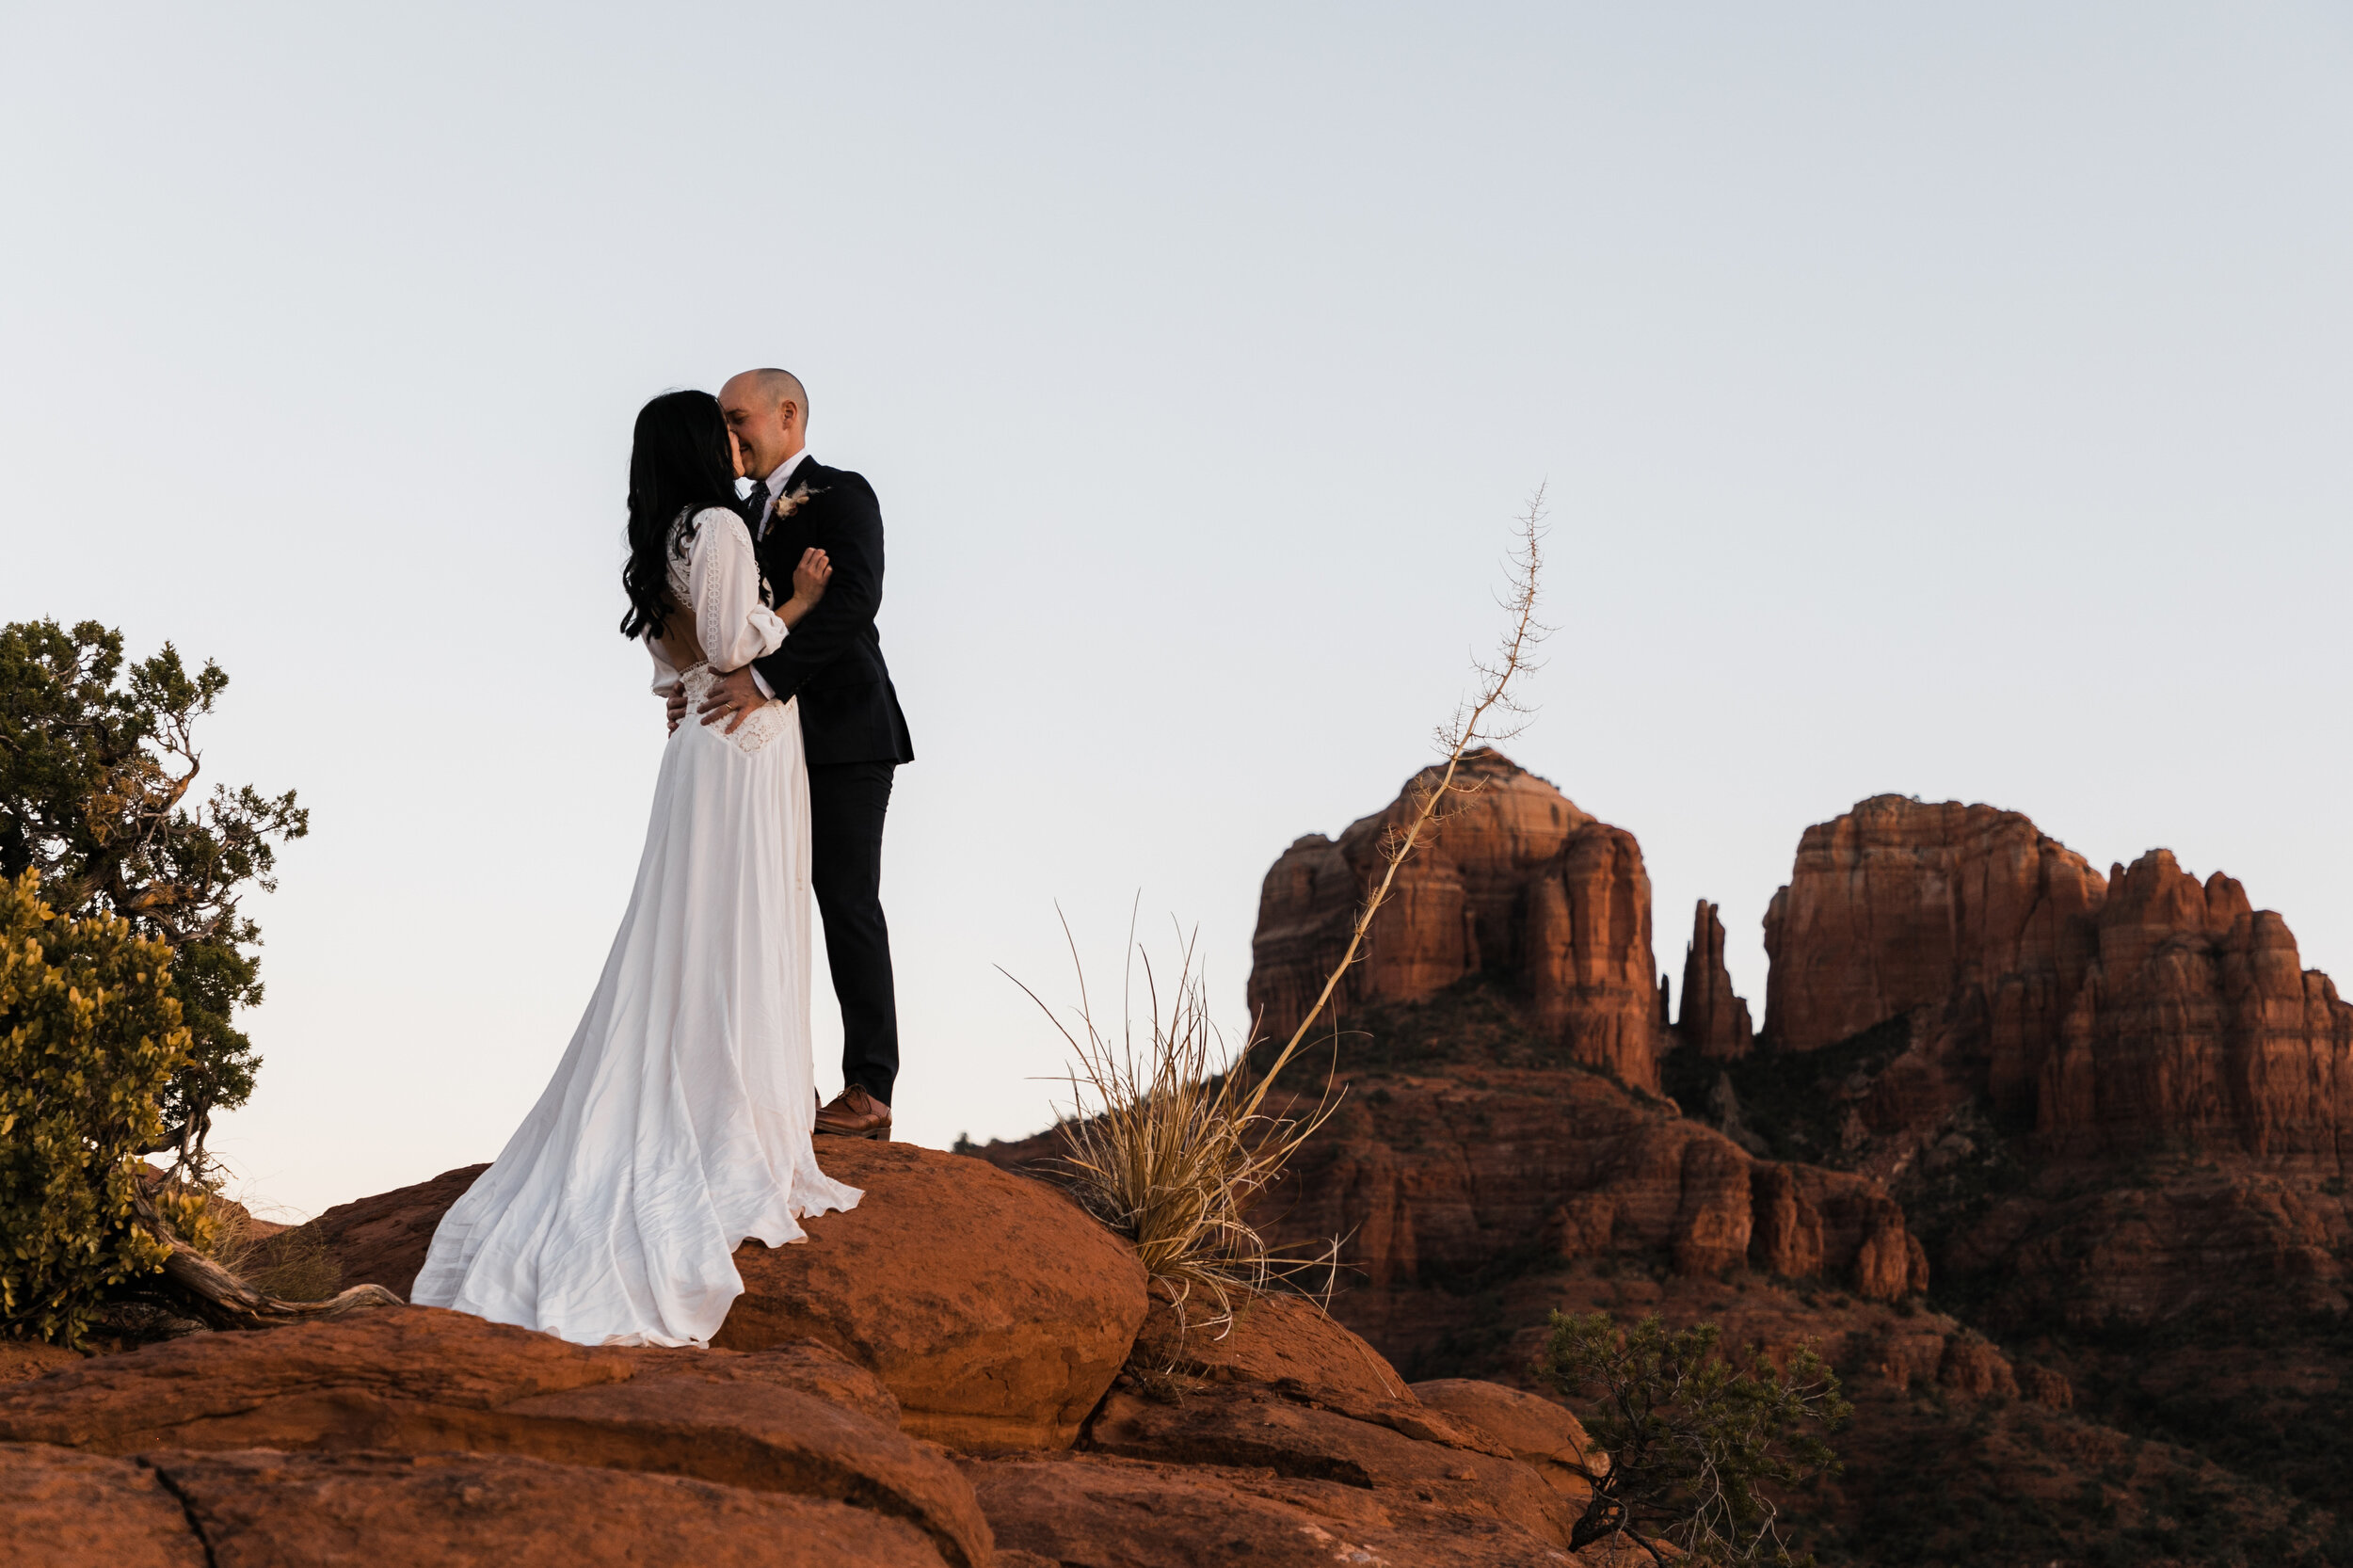 Rue de Seine Presley Gown in the Sedona Desert | The Hearnes Adventure Wedding Photography